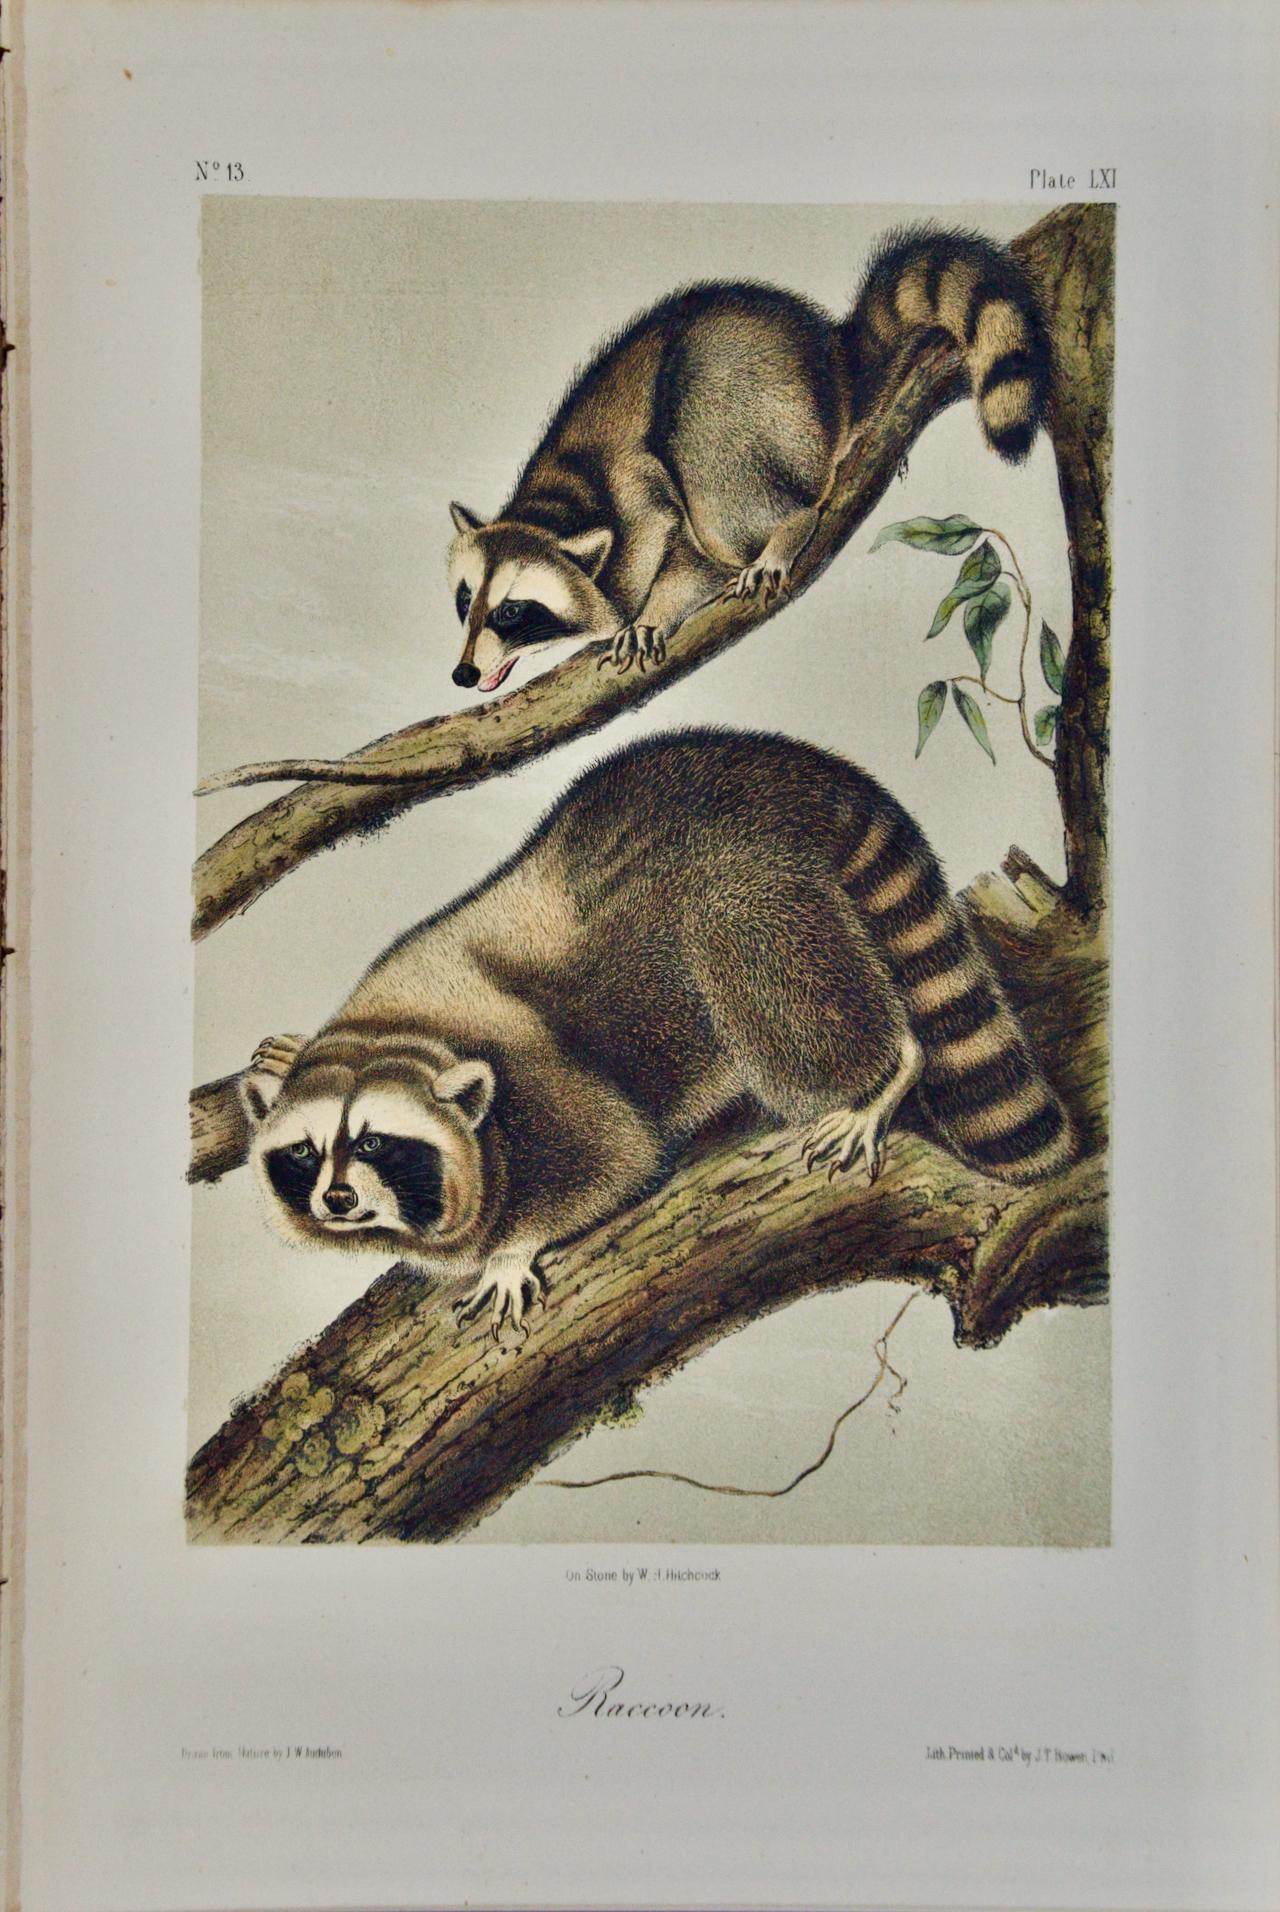 John James Audubon Animal Print - Raccoon: An Original 19th Century Audubon Hand-colored Lithograph